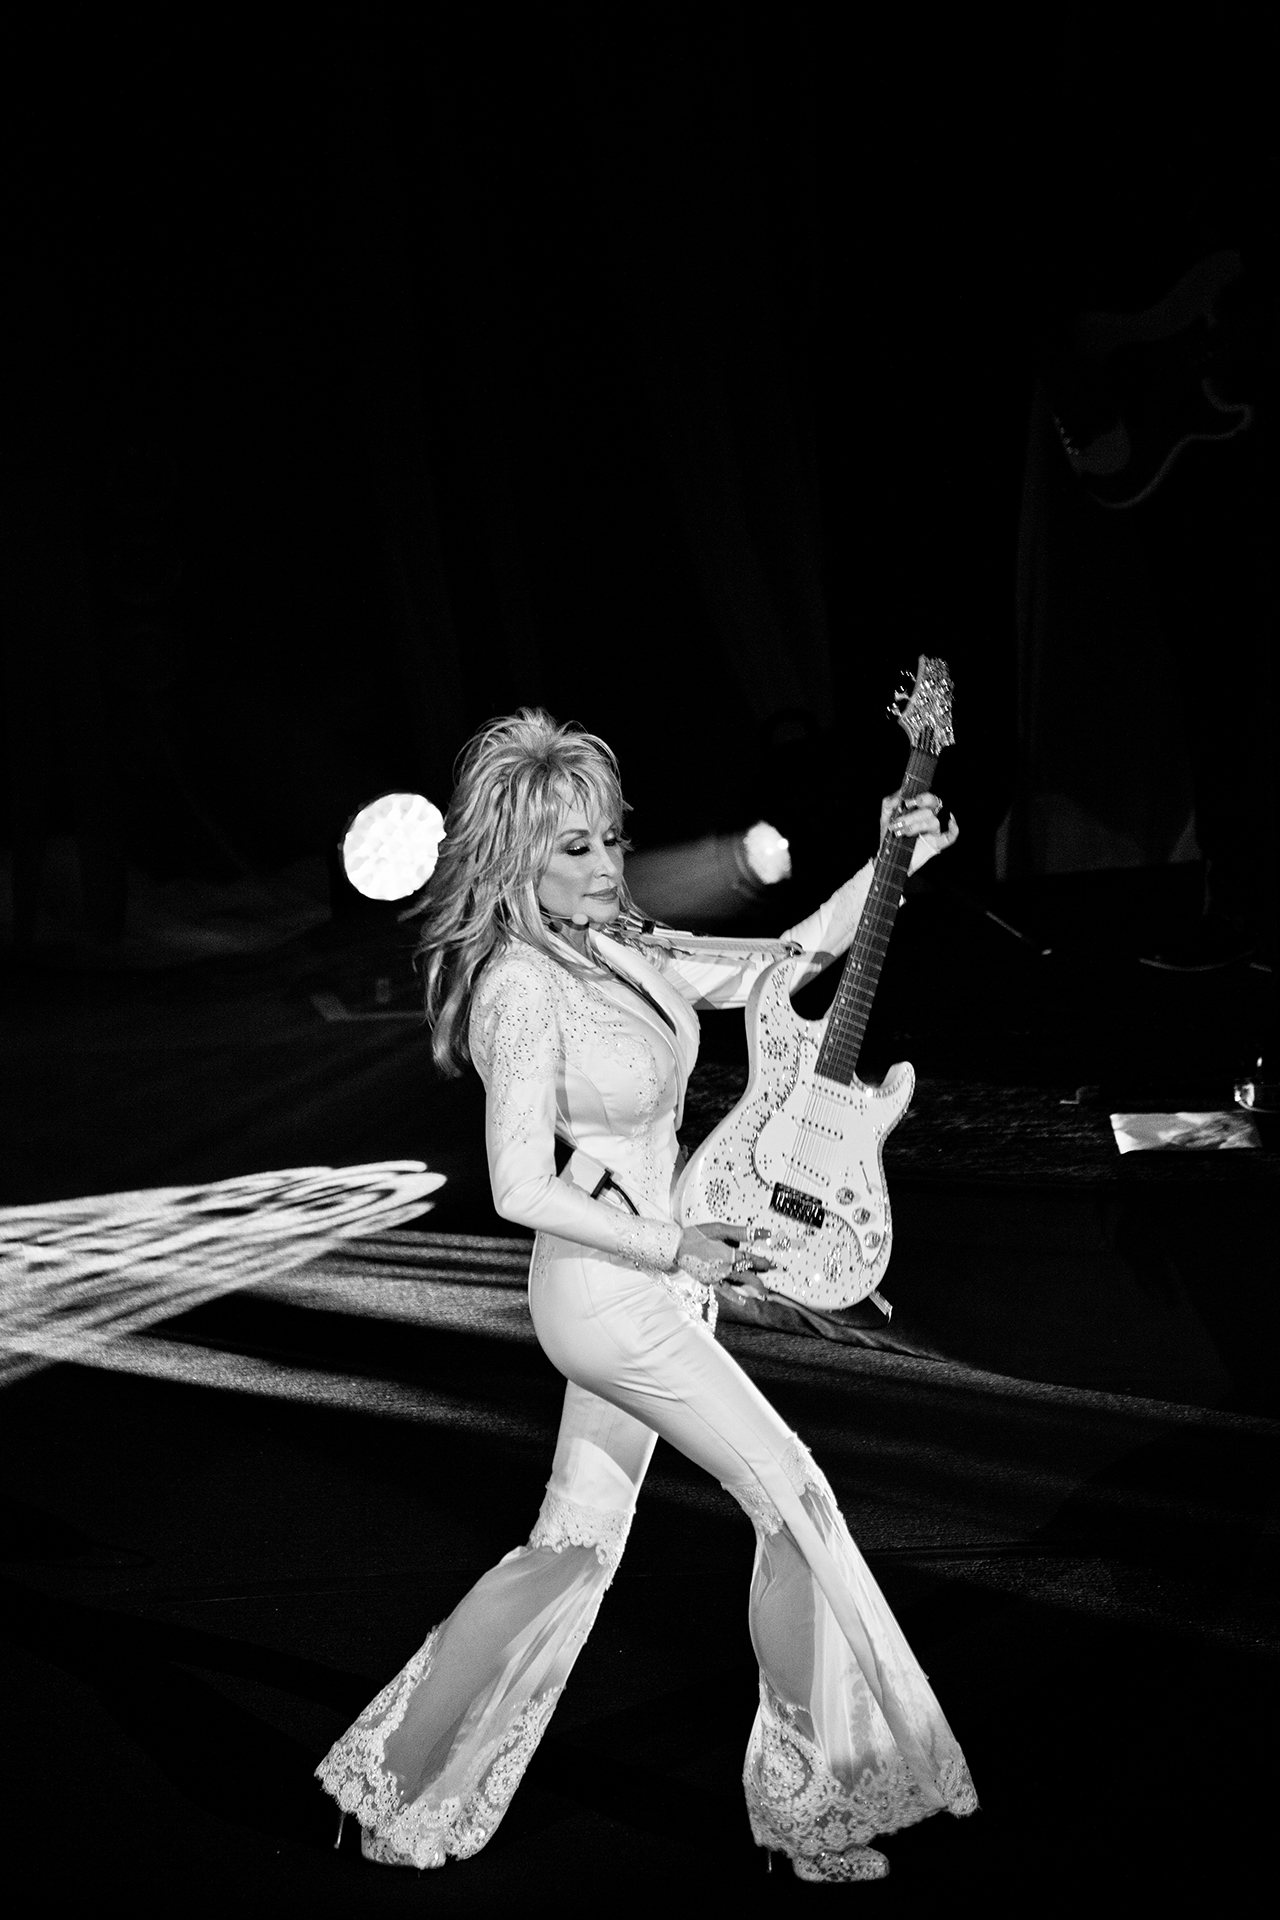 Dolly on stage at Nashville's Ryman Auditorium in 2015. (photo courtesy of Dolly Parton)